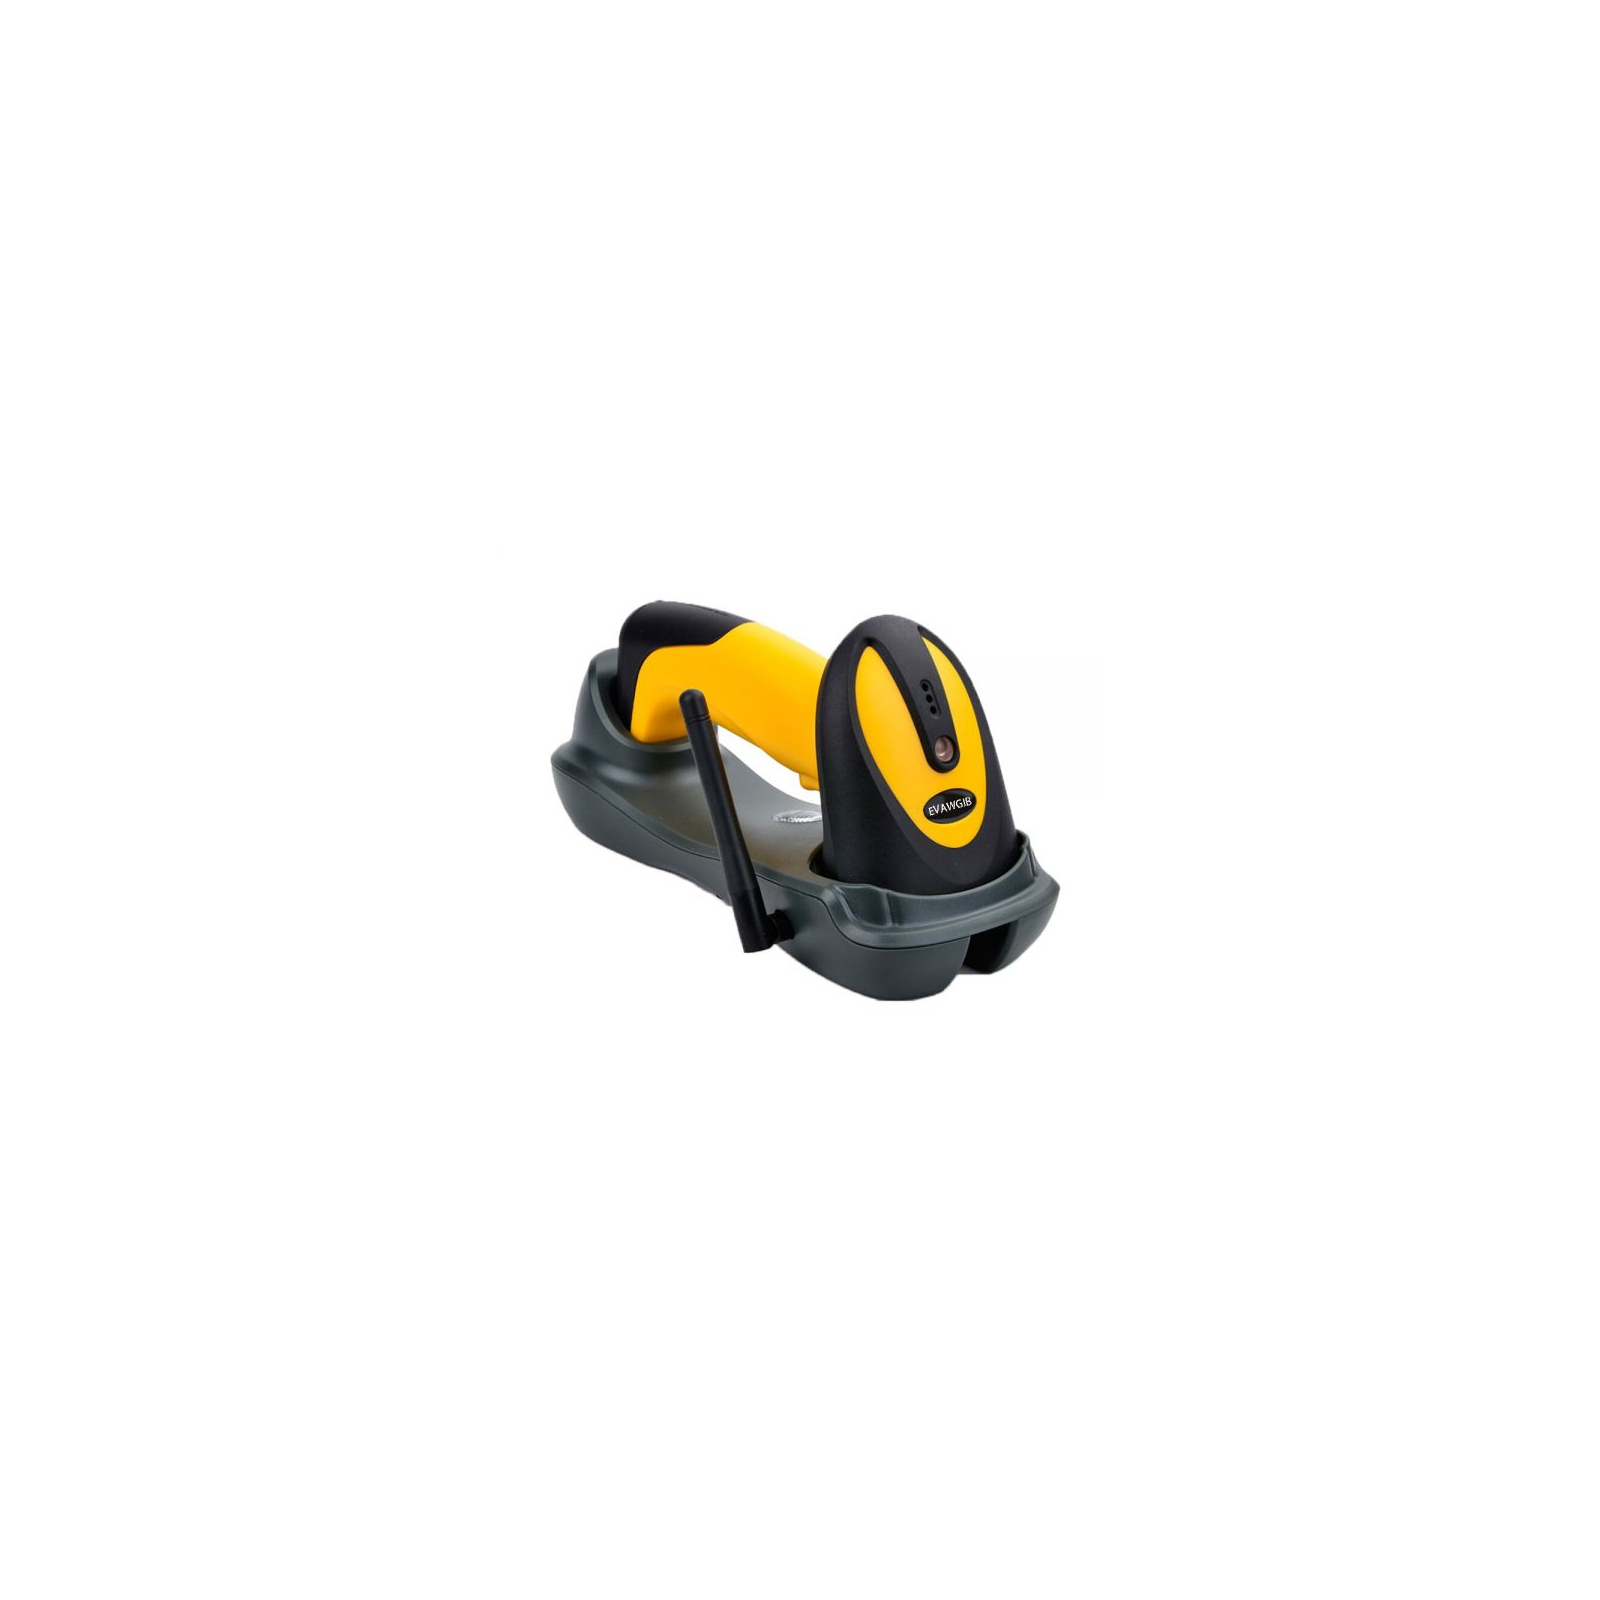 Сканер штрих-кода UKRMARK EV-W2503 2D, 433MHz, USB, IP64, stand, black/yellow (00769) изображение 2